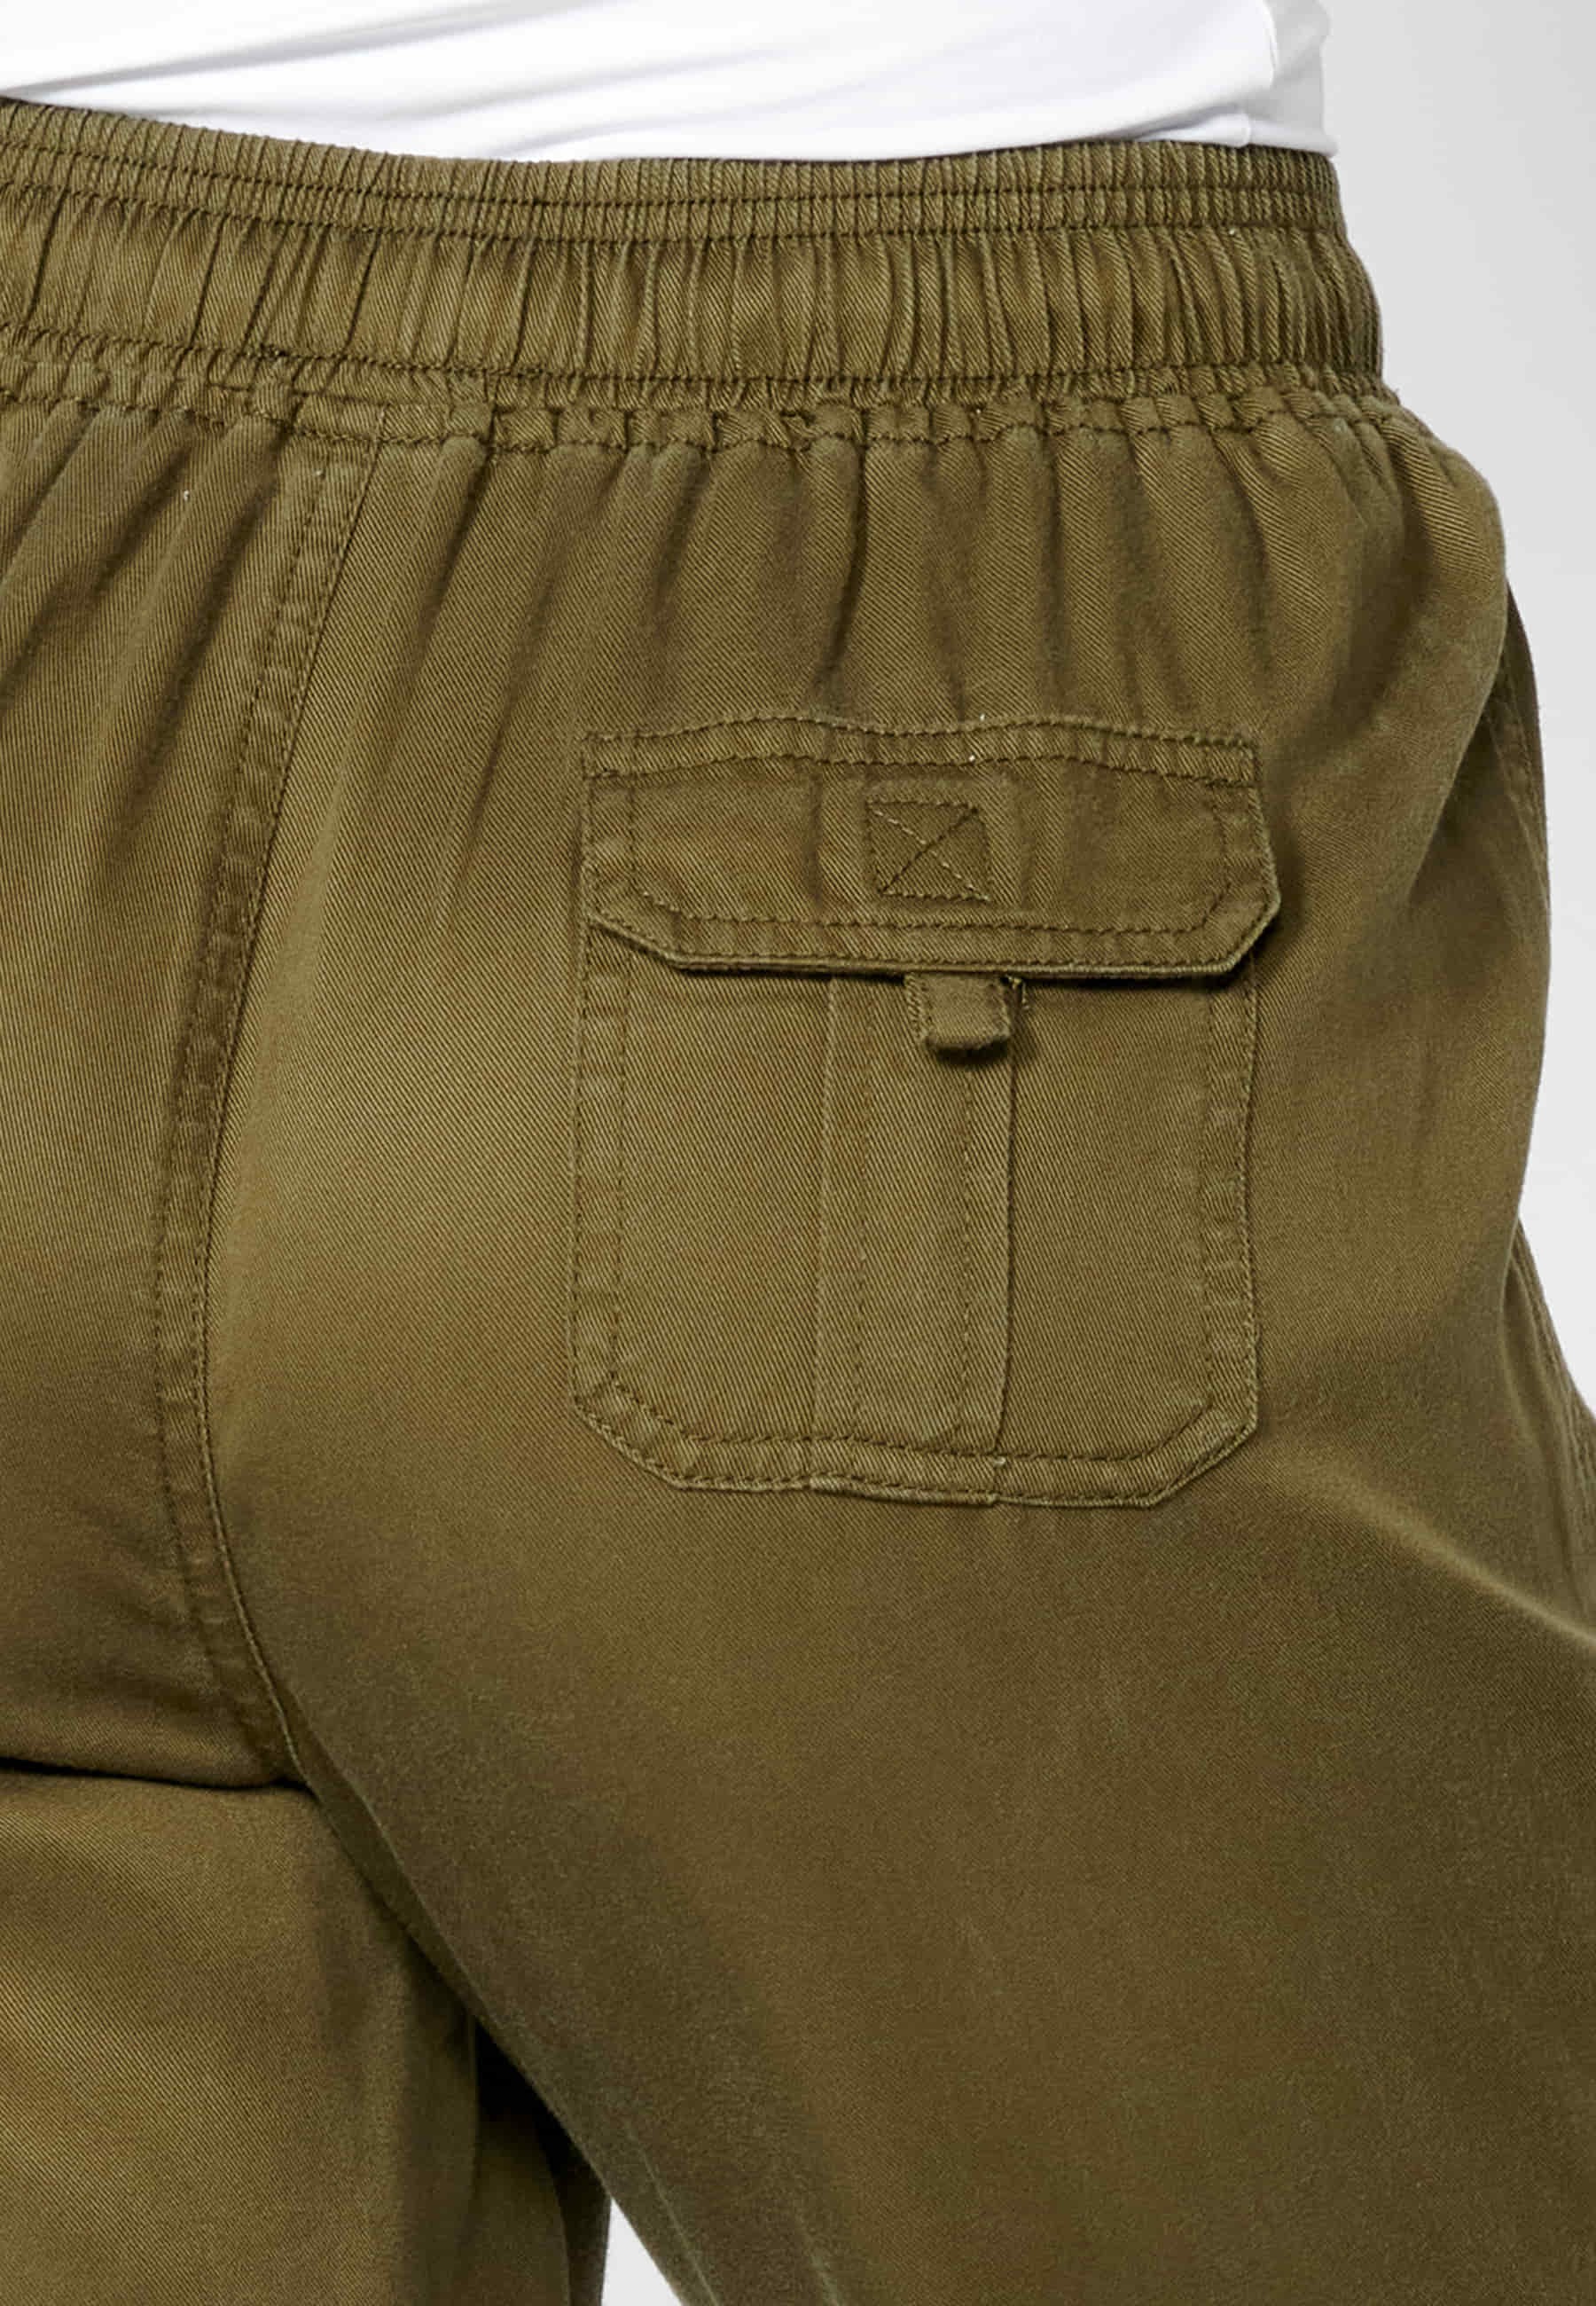 Long pants with adjustable waist Khaki color for Woman 3